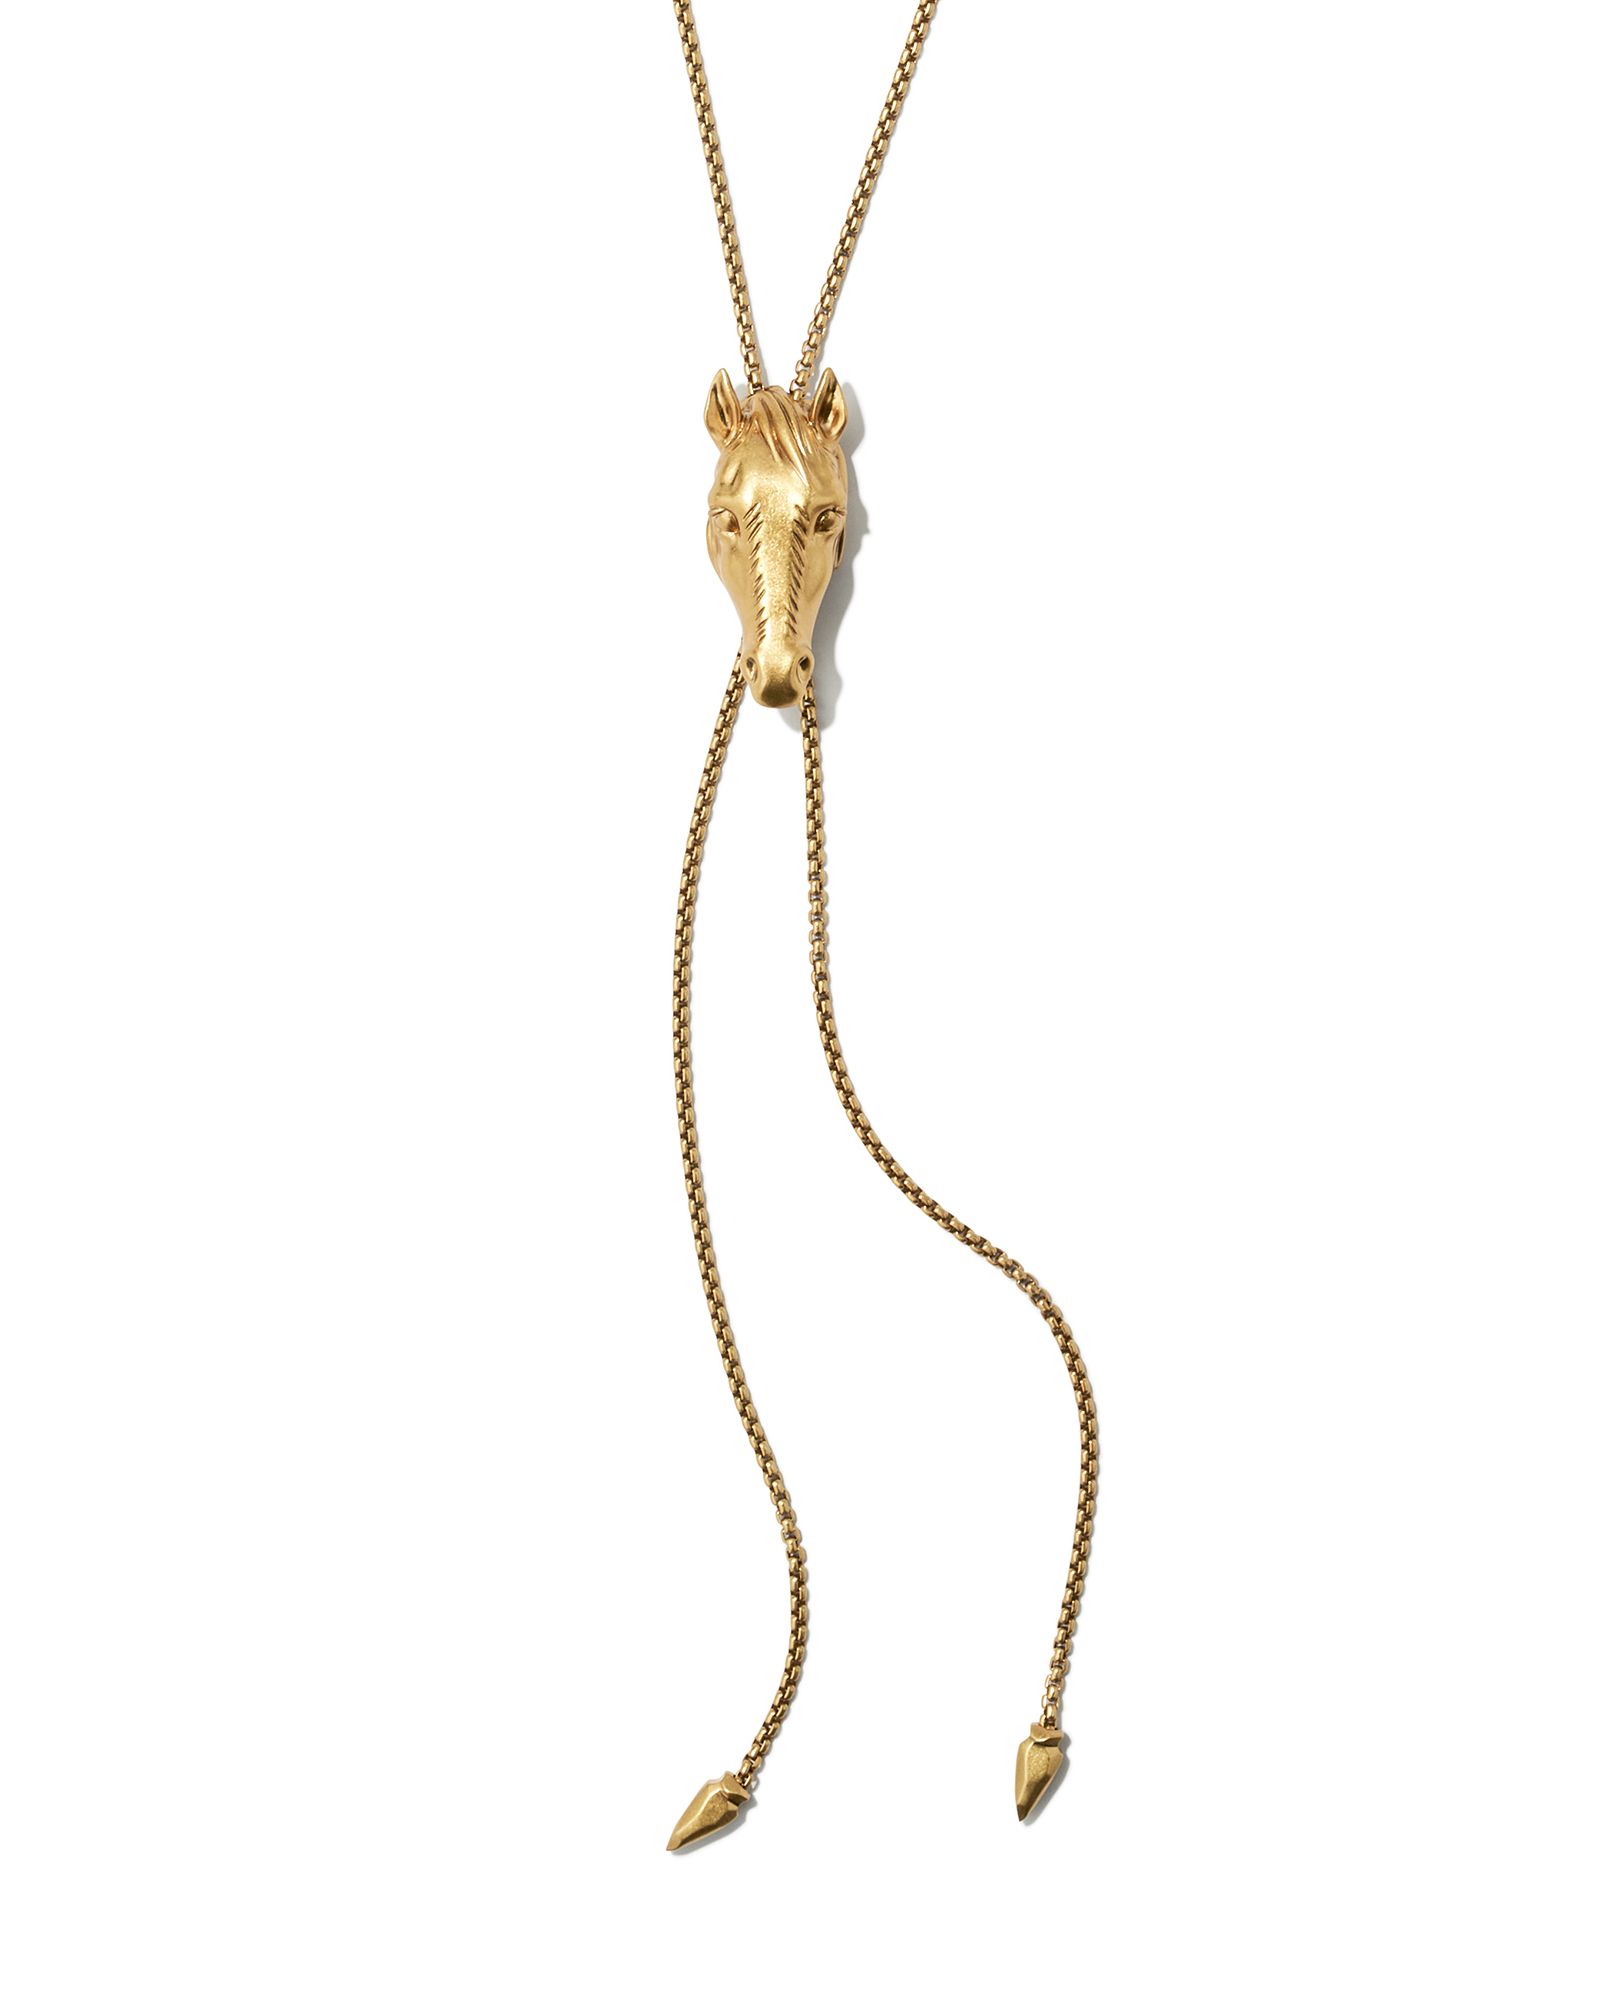 Beau Bolo Necklace in Vintage Gold | Kendra Scott